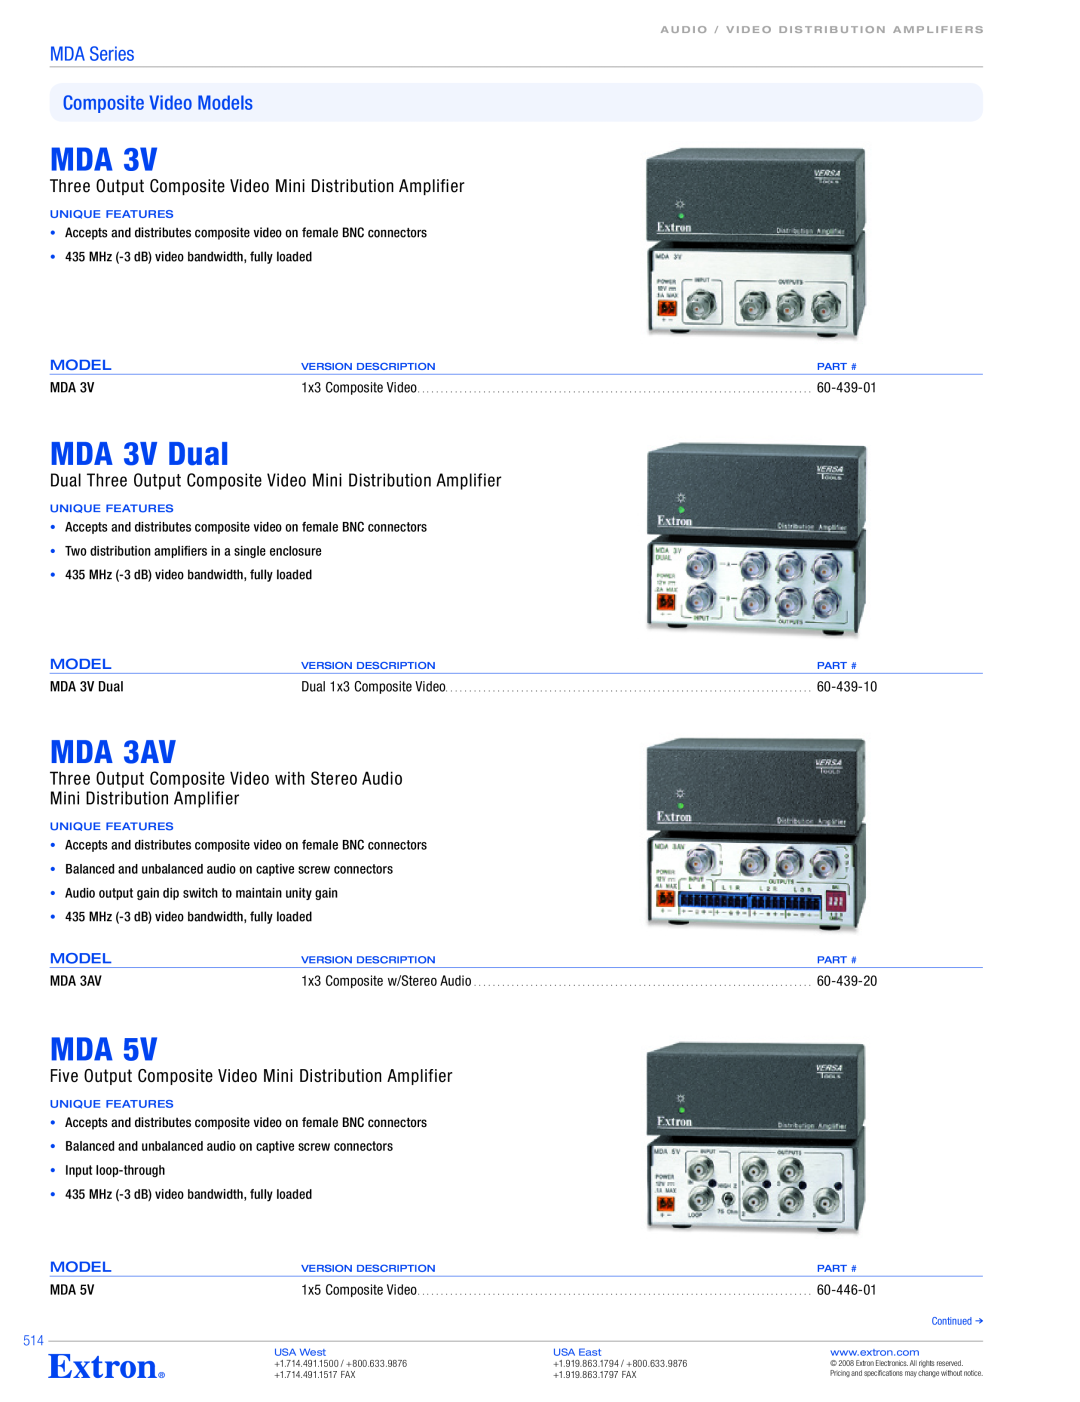 Extron electronic MDA 3V 1x3, MDA 3V DUAL specifications MDA 3V Dual, MDA 3AV, MDA Series Composite Video Models 